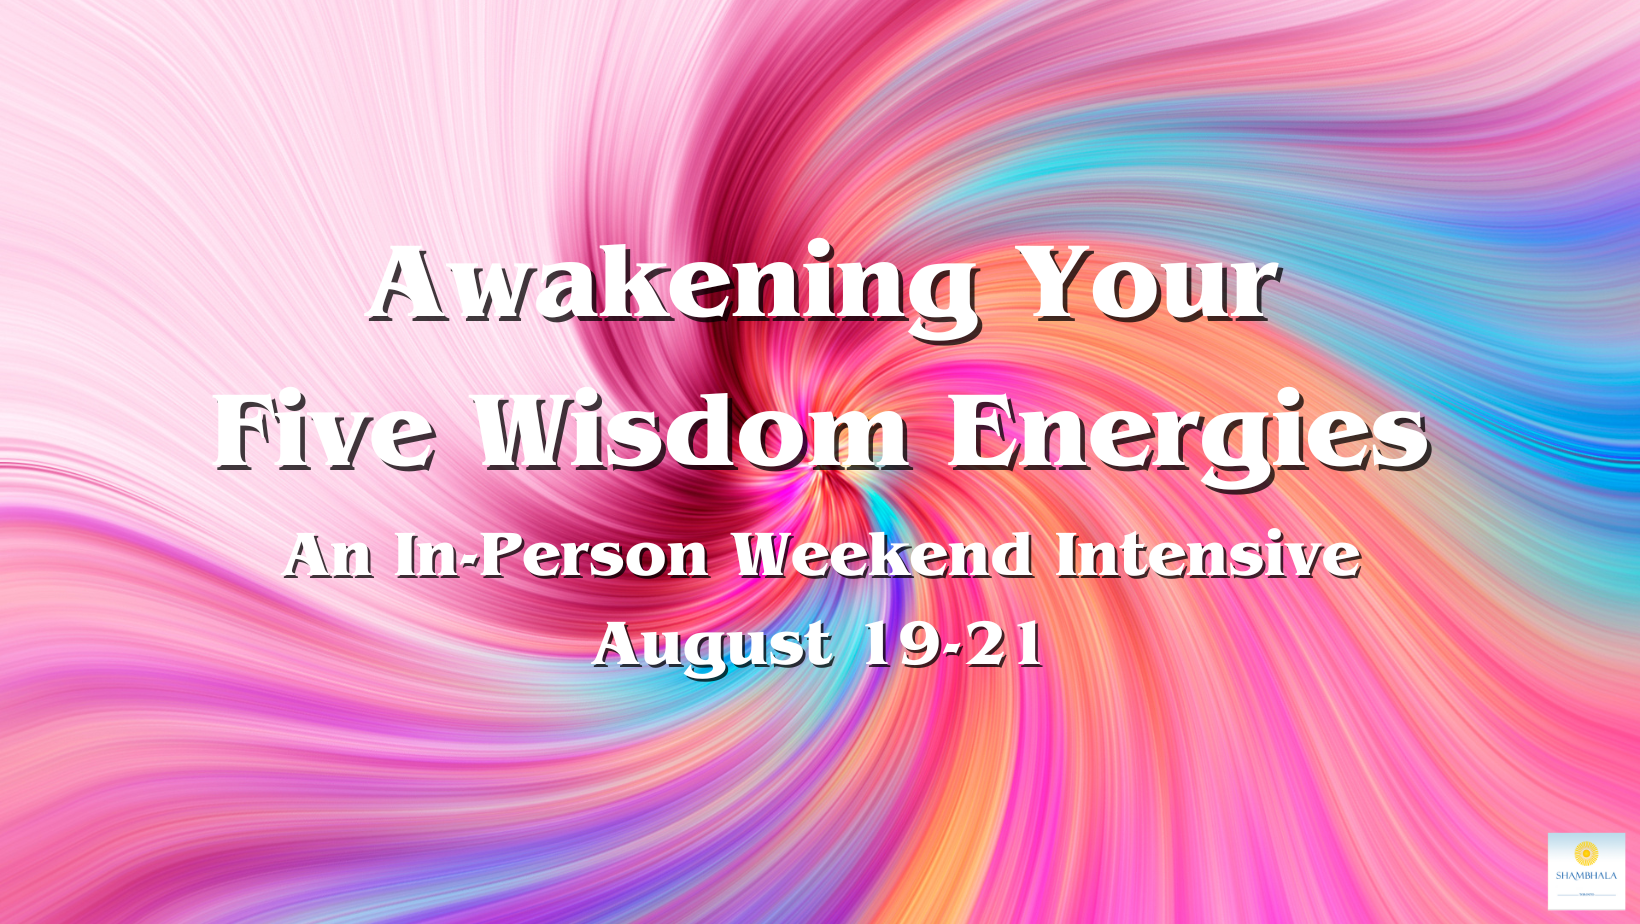 Toronto/Awakening_Your_Five_Wisdom_Energies_cover.png